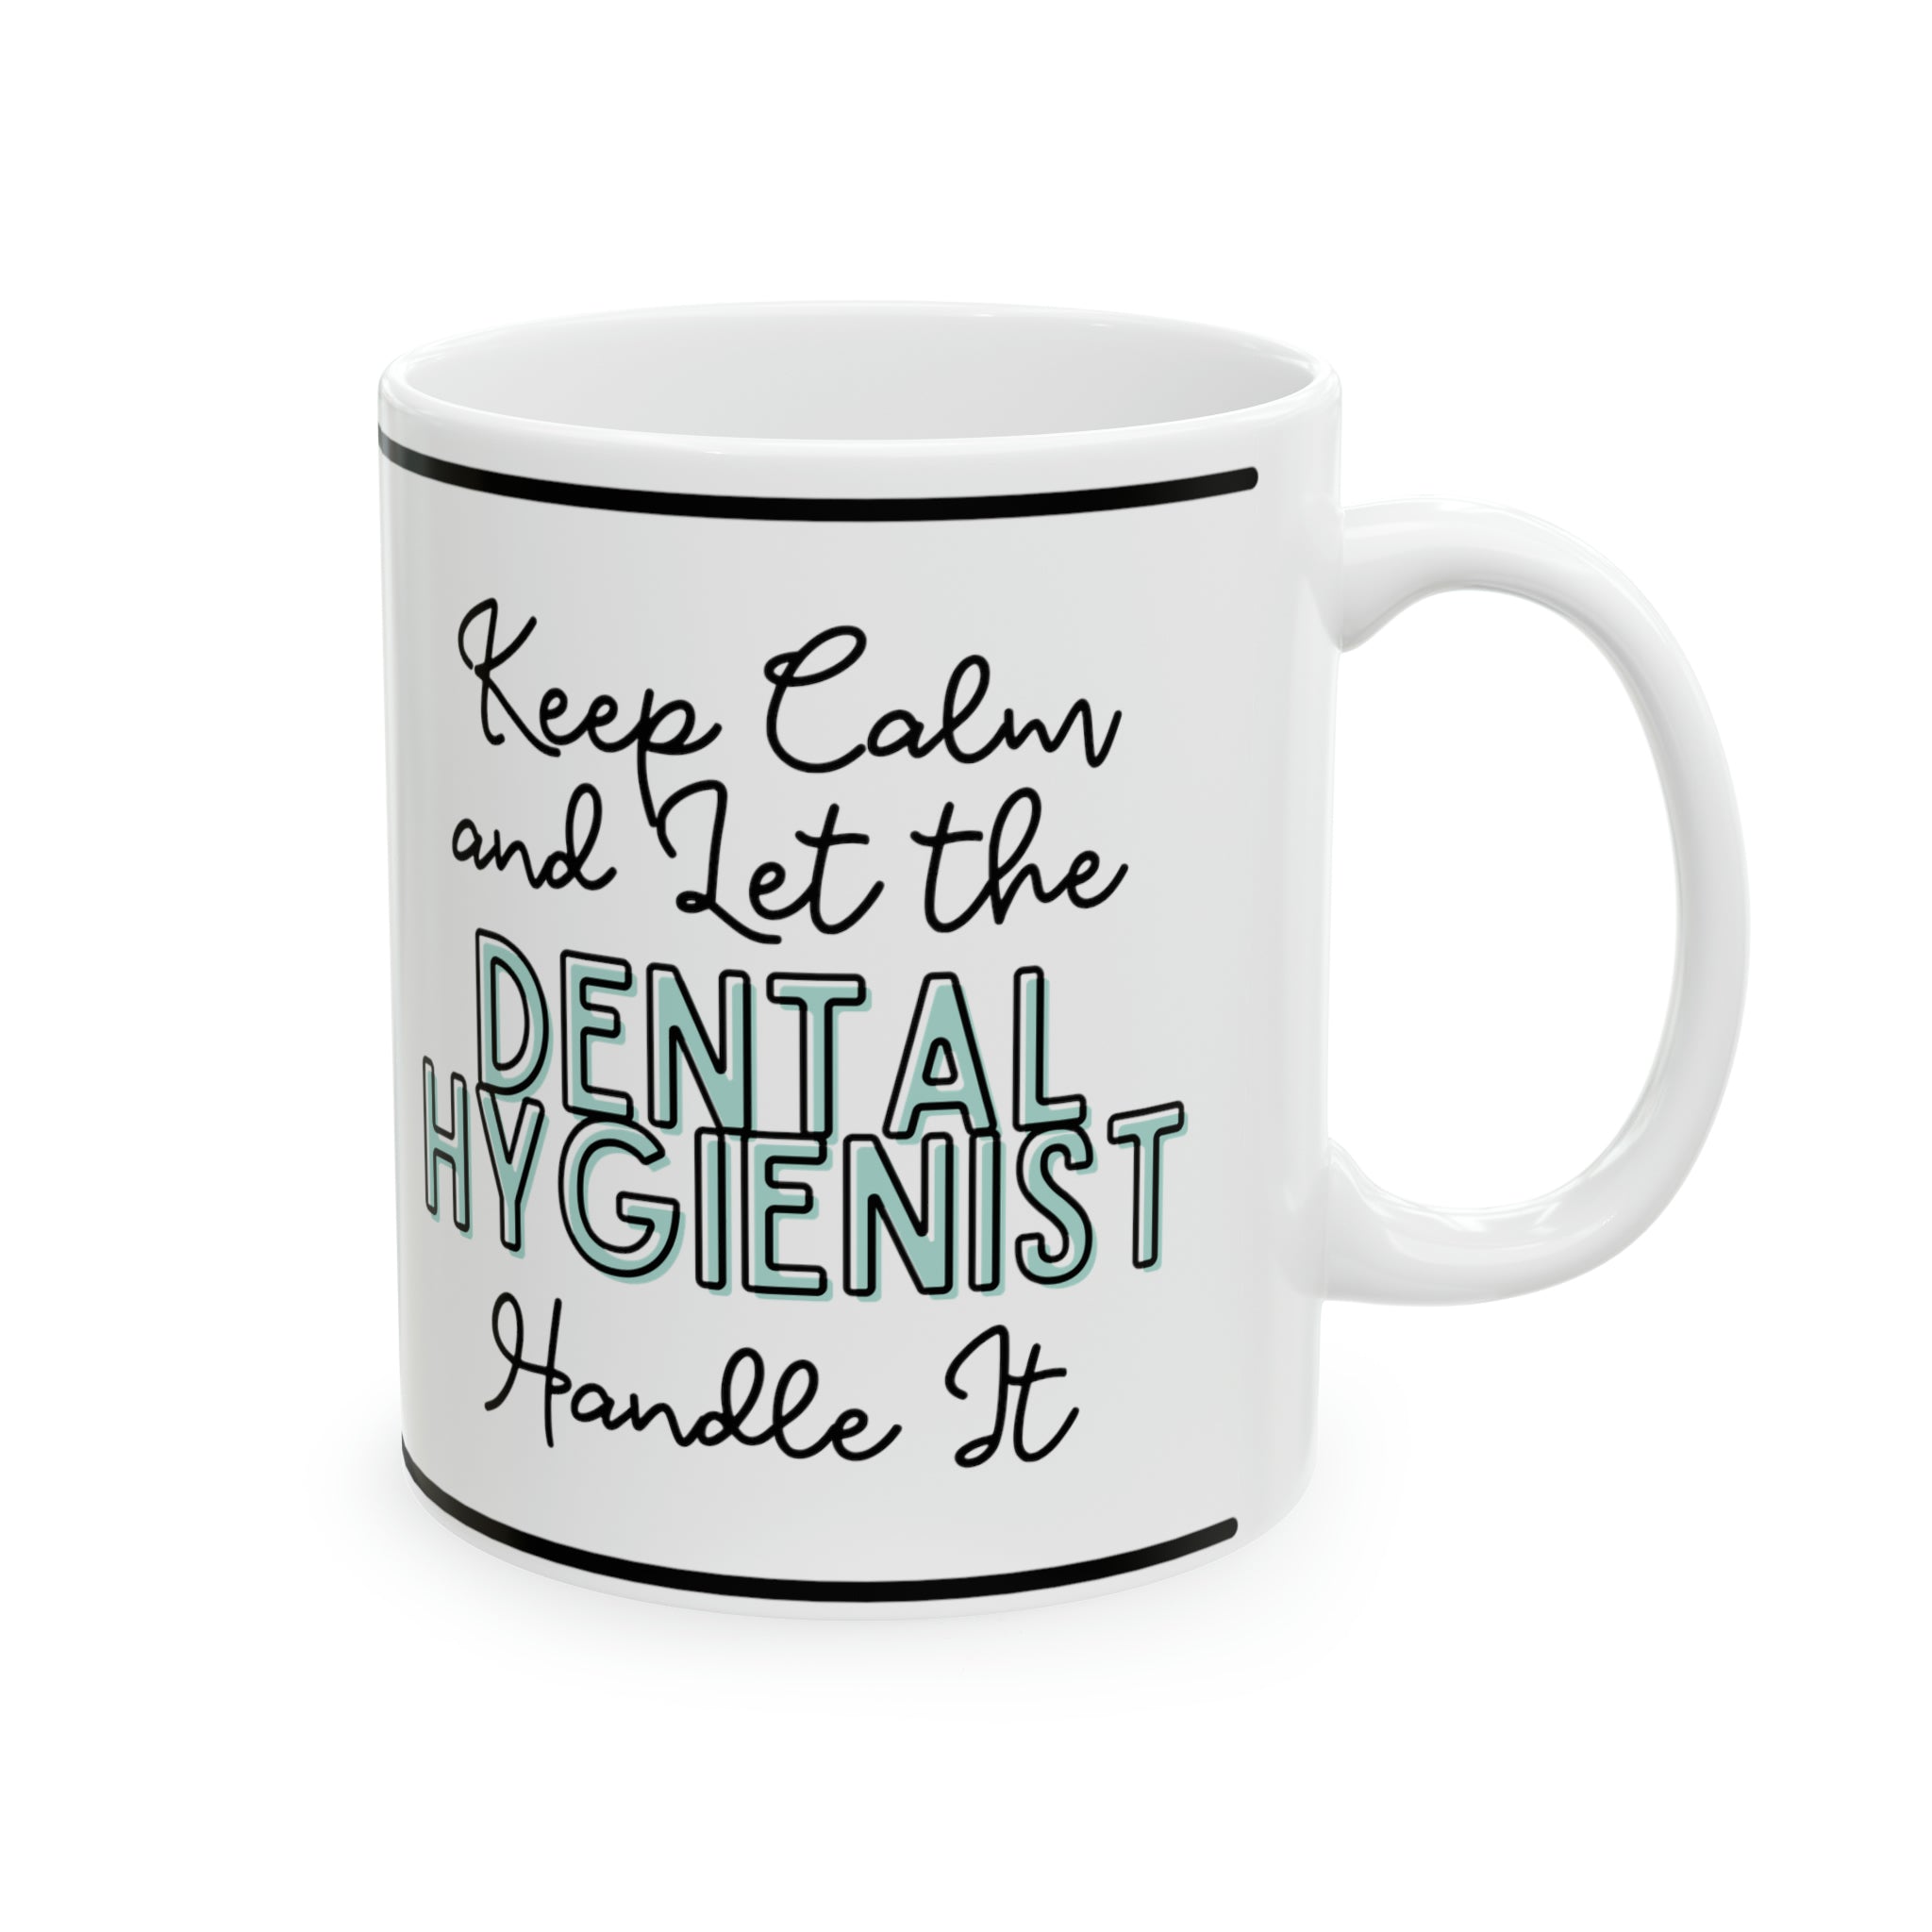 Keep Calm and let the Dental Hygienist Handle It - Ceramic Mug, 11oz